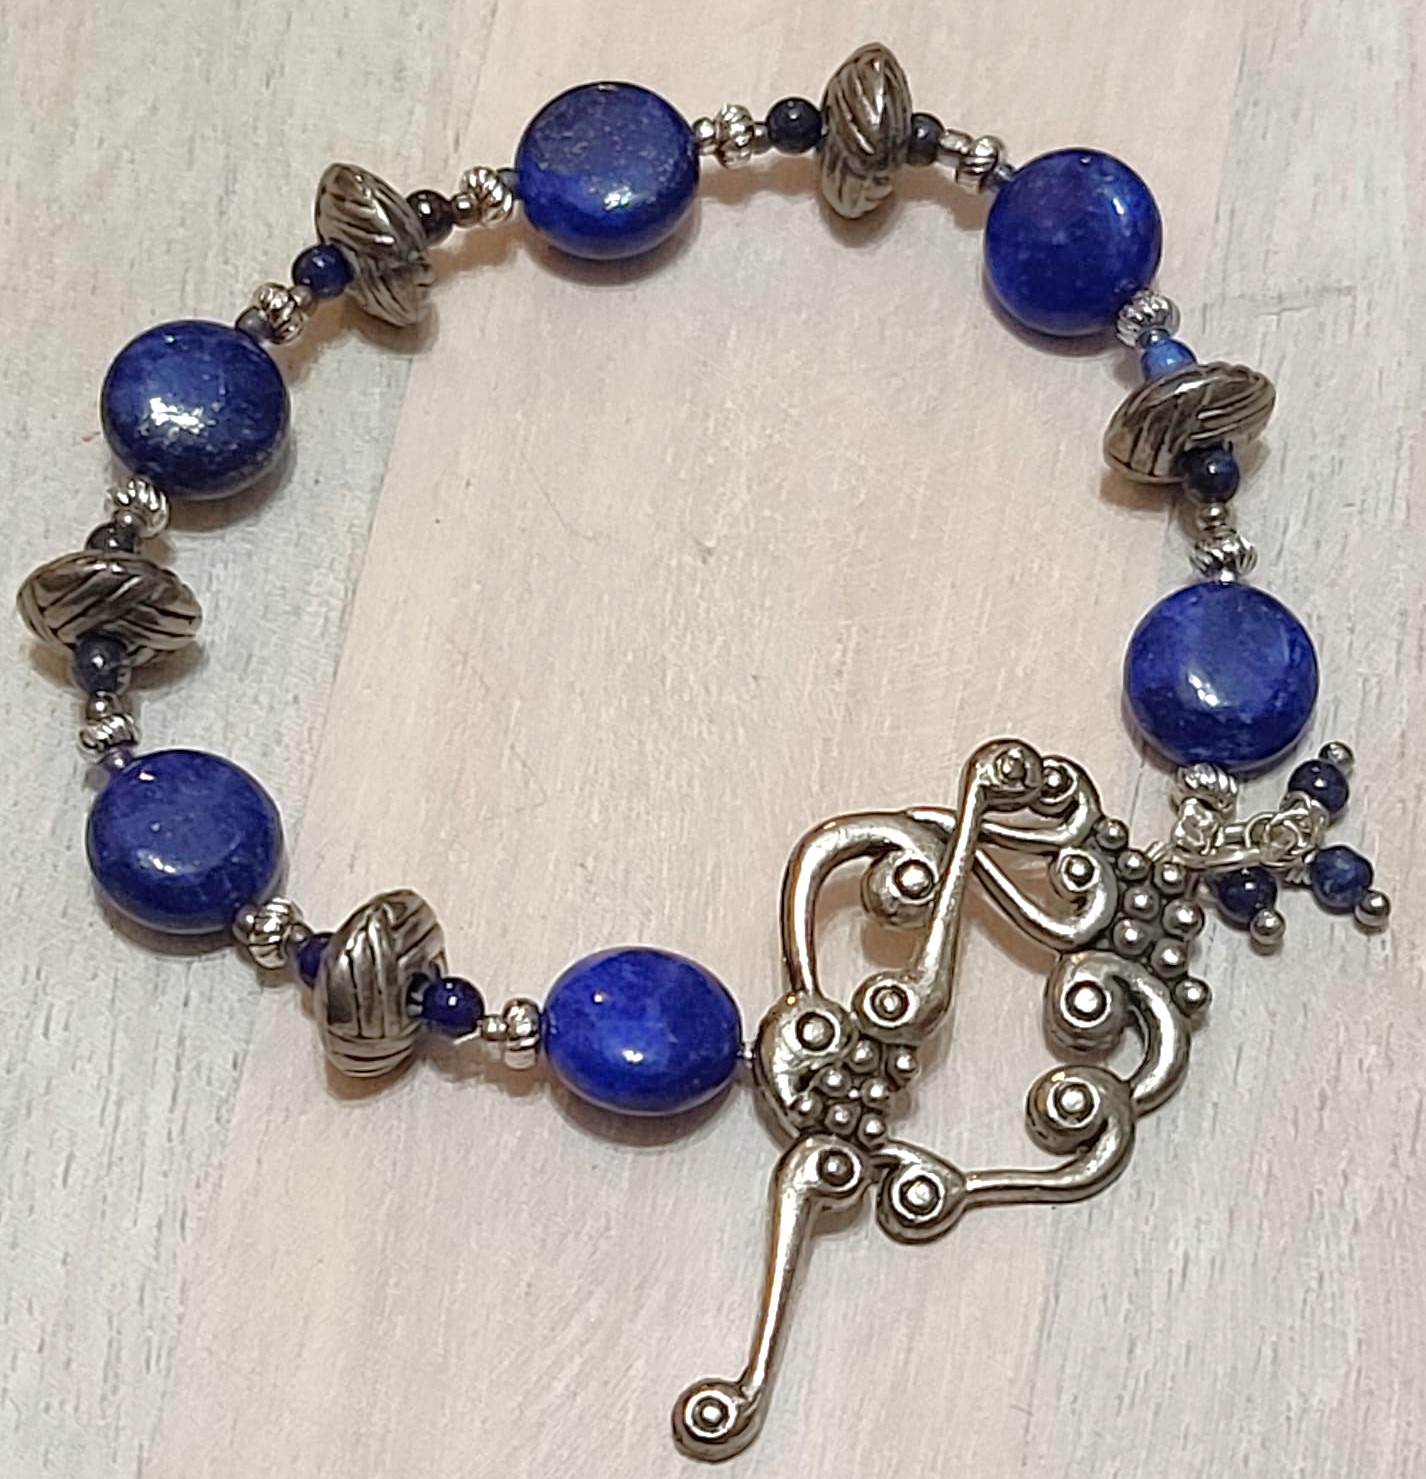 Blue lapis bracelet, bali silver, ornamental grape leaf clasp